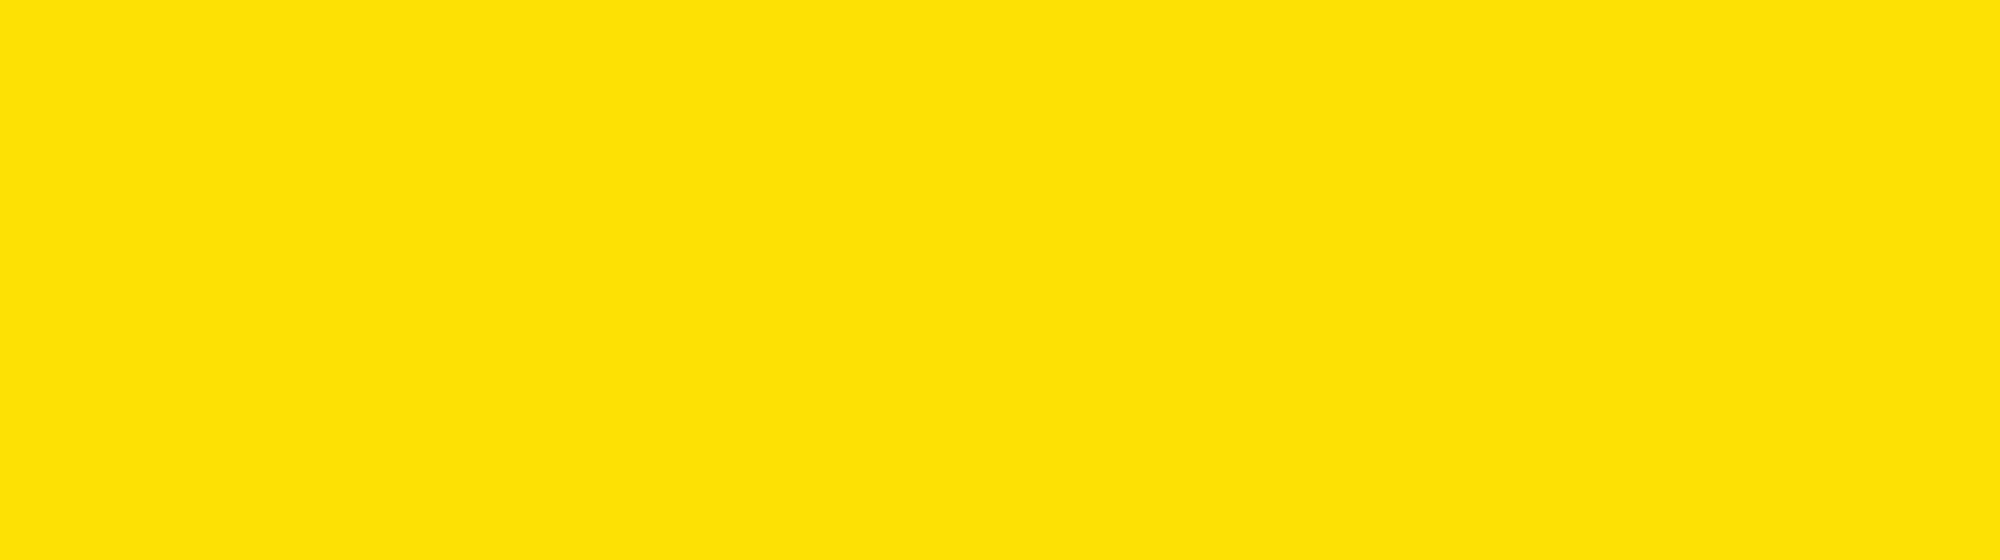 Yellow banner SIAL Paris